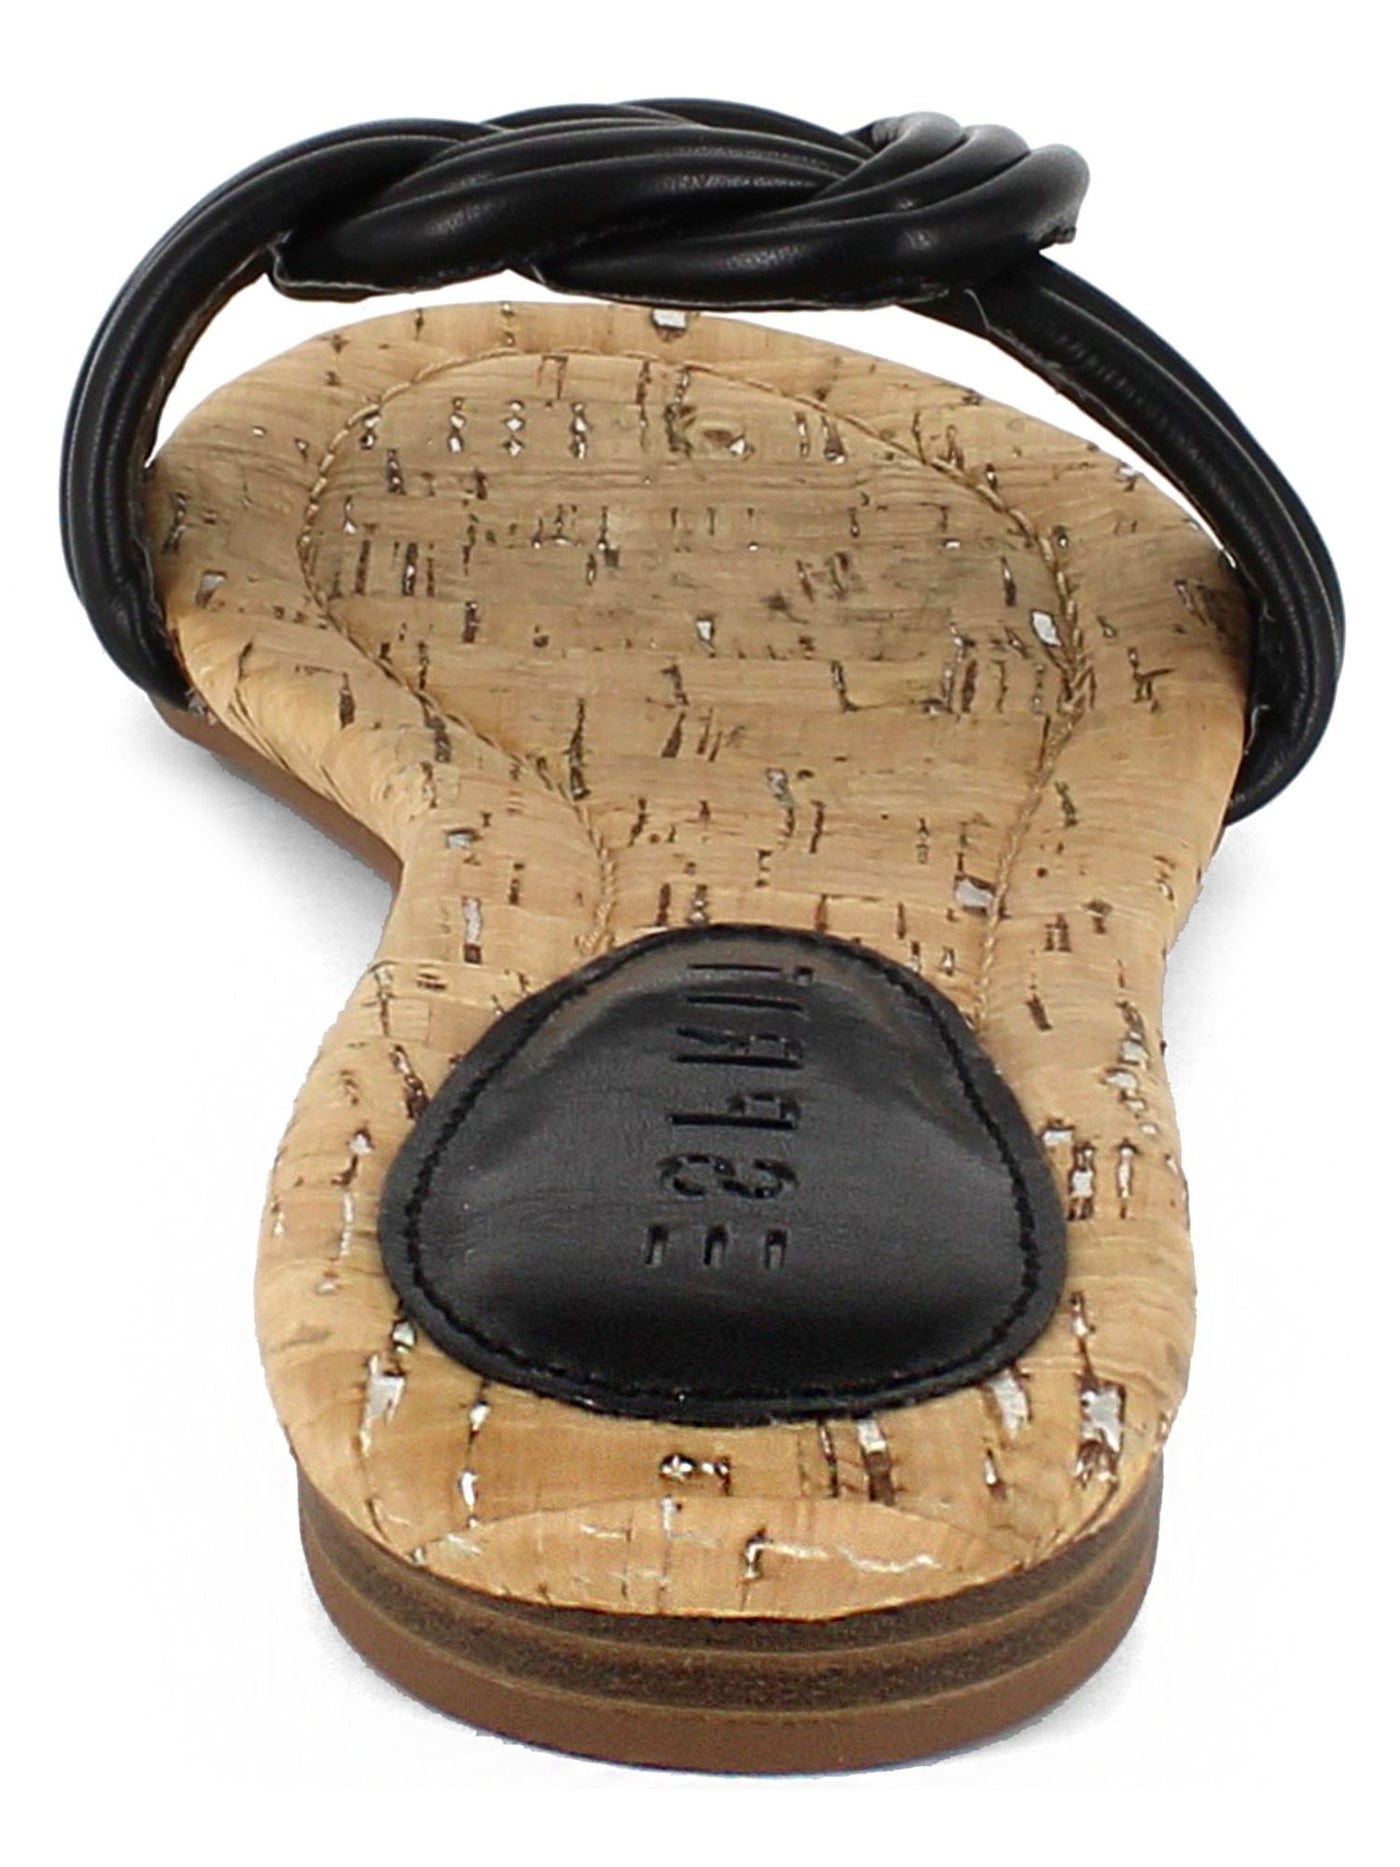 ESPRIT Womens Black Knot Detail Cork-Like Footbed Flexible Sole Padded Strappy Katelyn Open Toe Slip On Slide Sandals Shoes 9 M